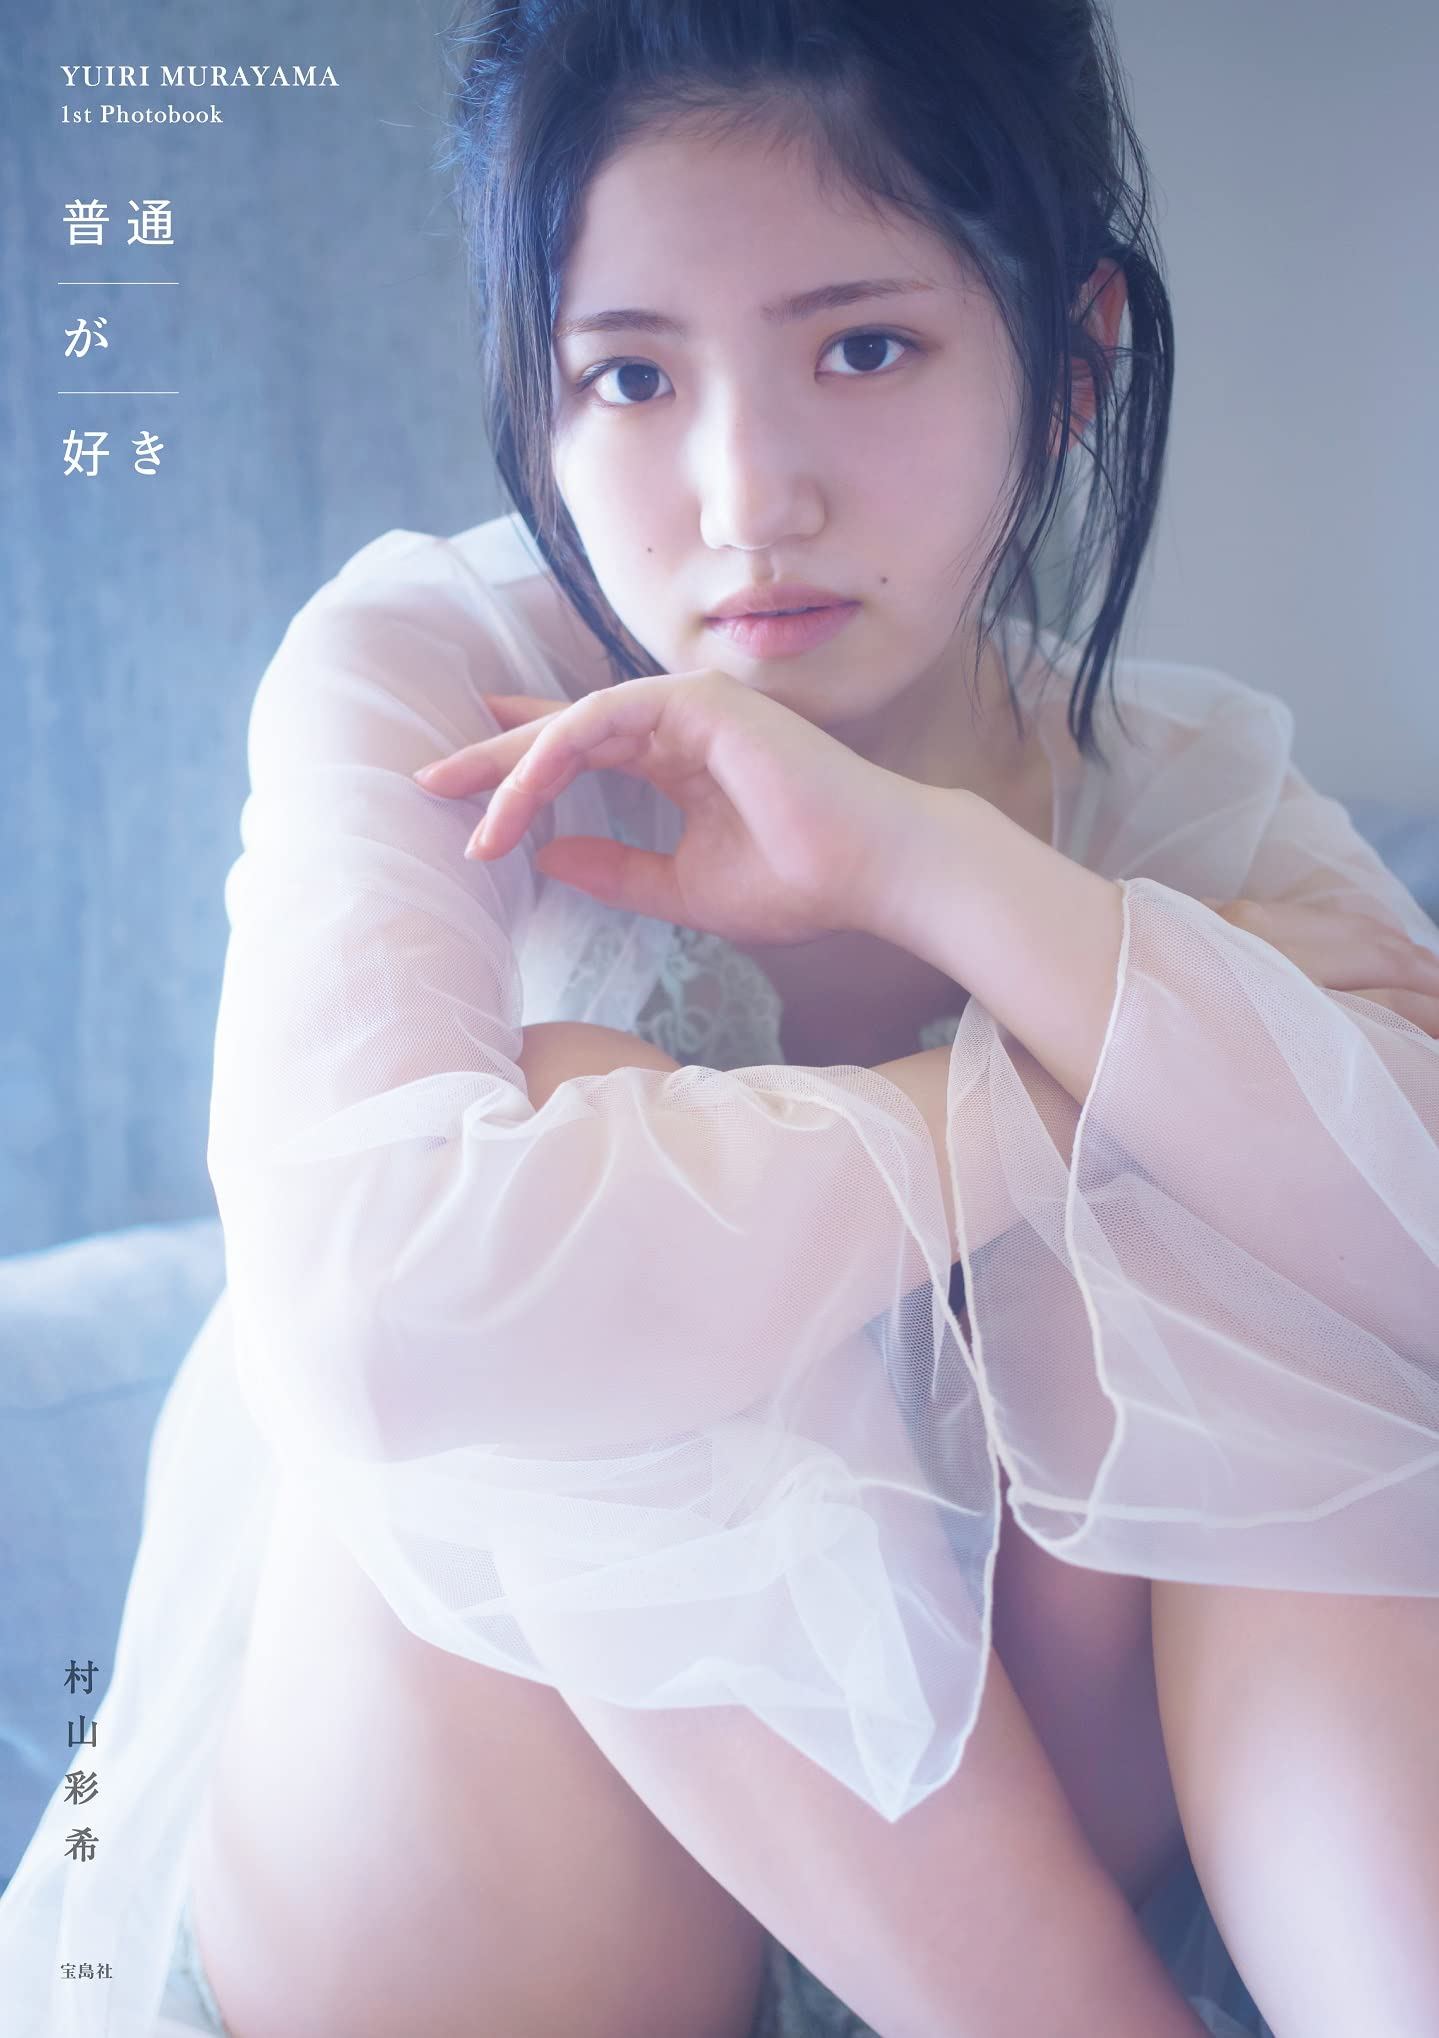 AKB48 Yuiri Murayama 1st Photobook